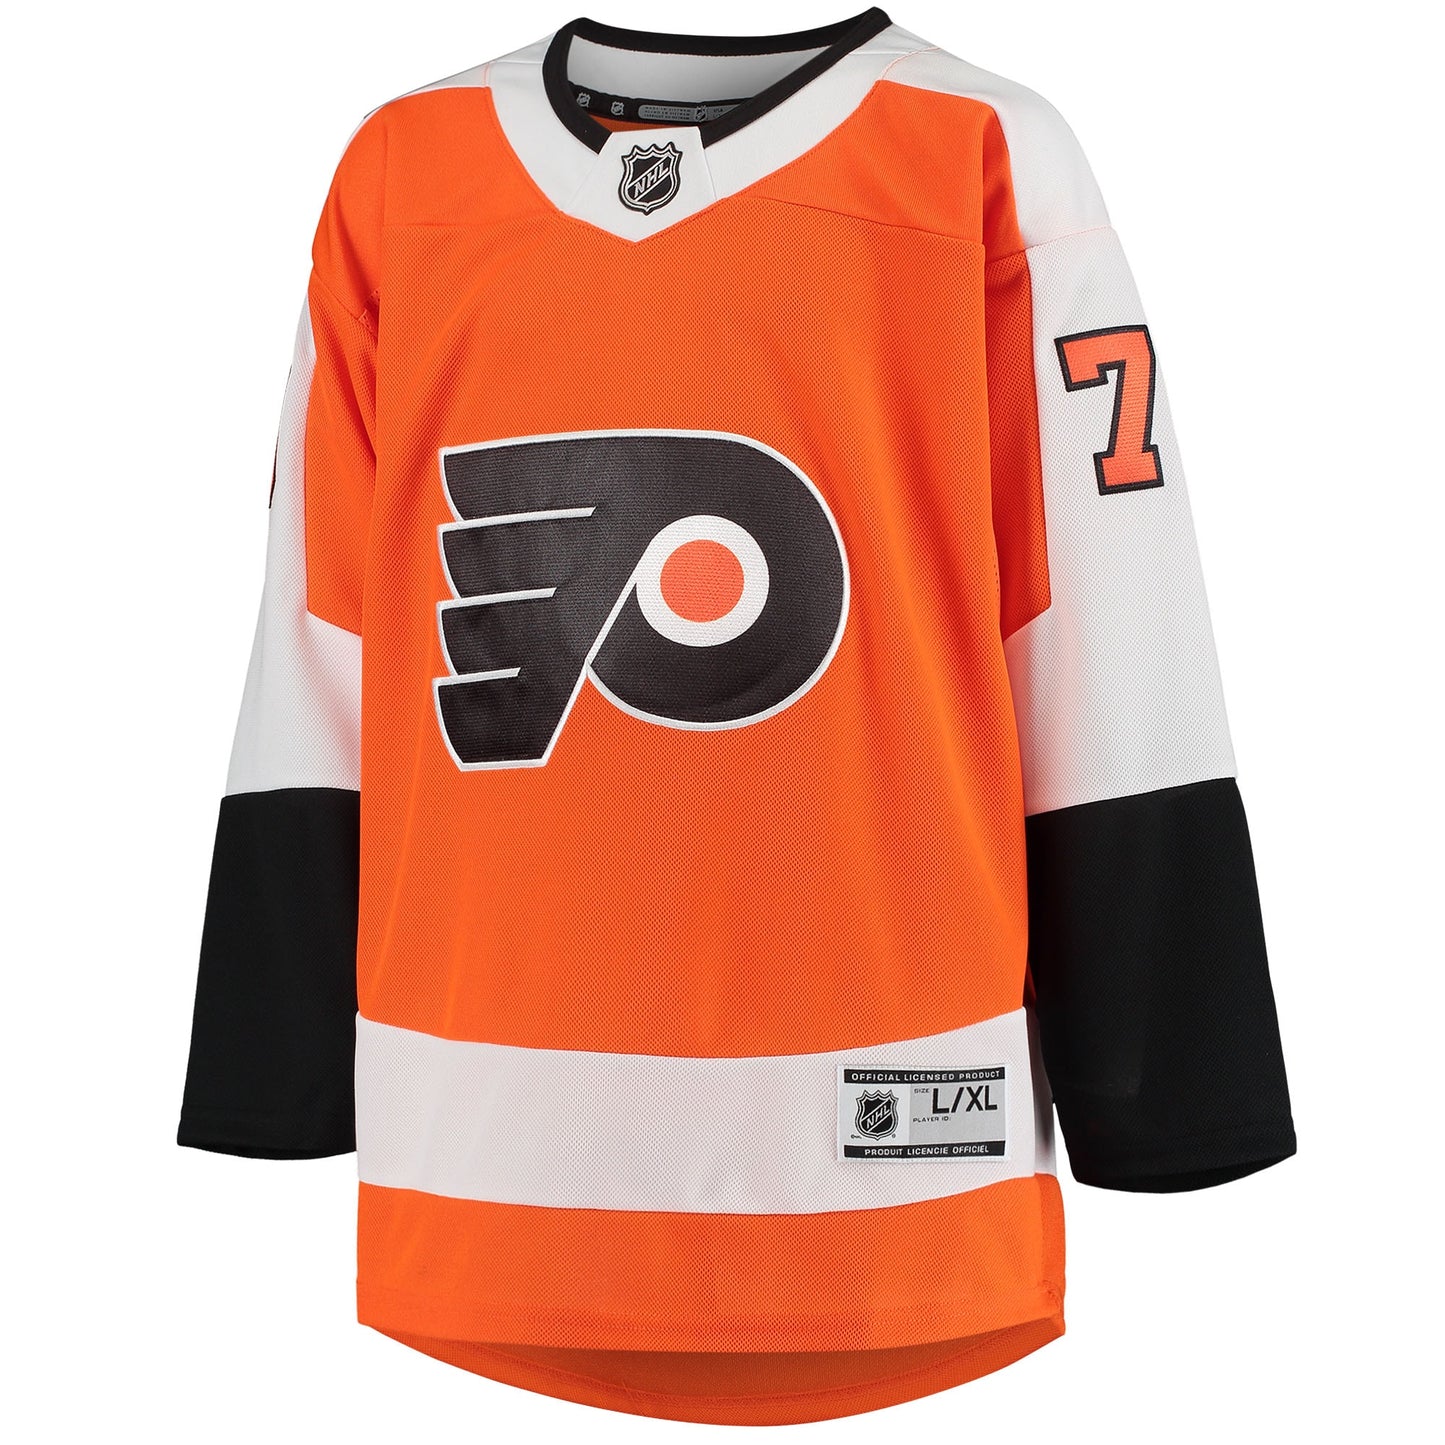 Carter Hart Philadelphia Flyers Youth Home Premier Player Jersey - Orange